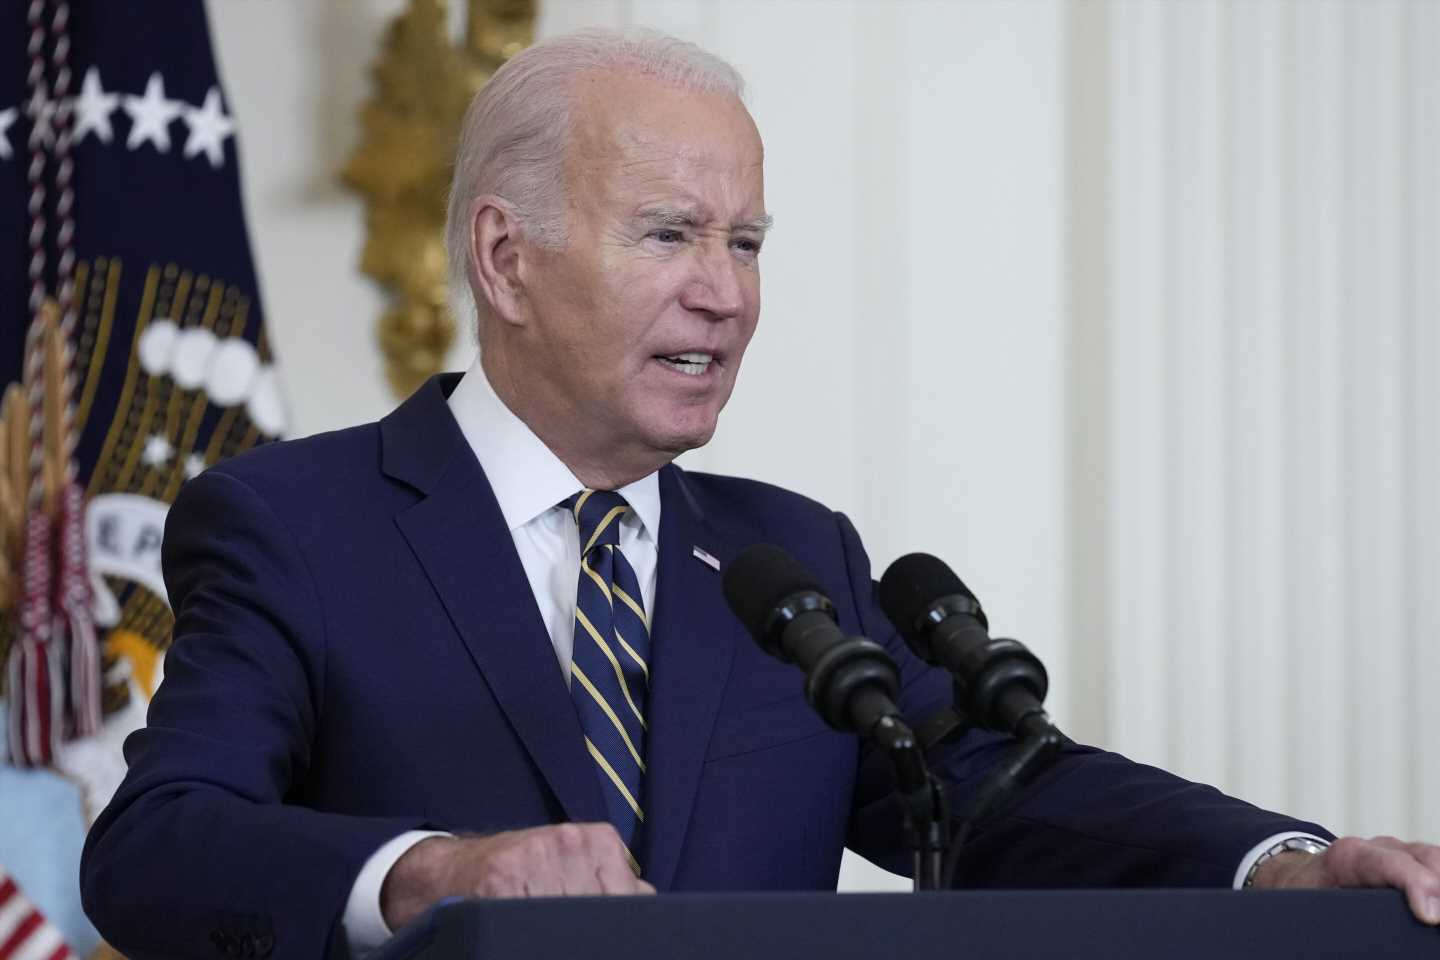 Biden announces an advanced cancer research initiative as part of his moonshot effort